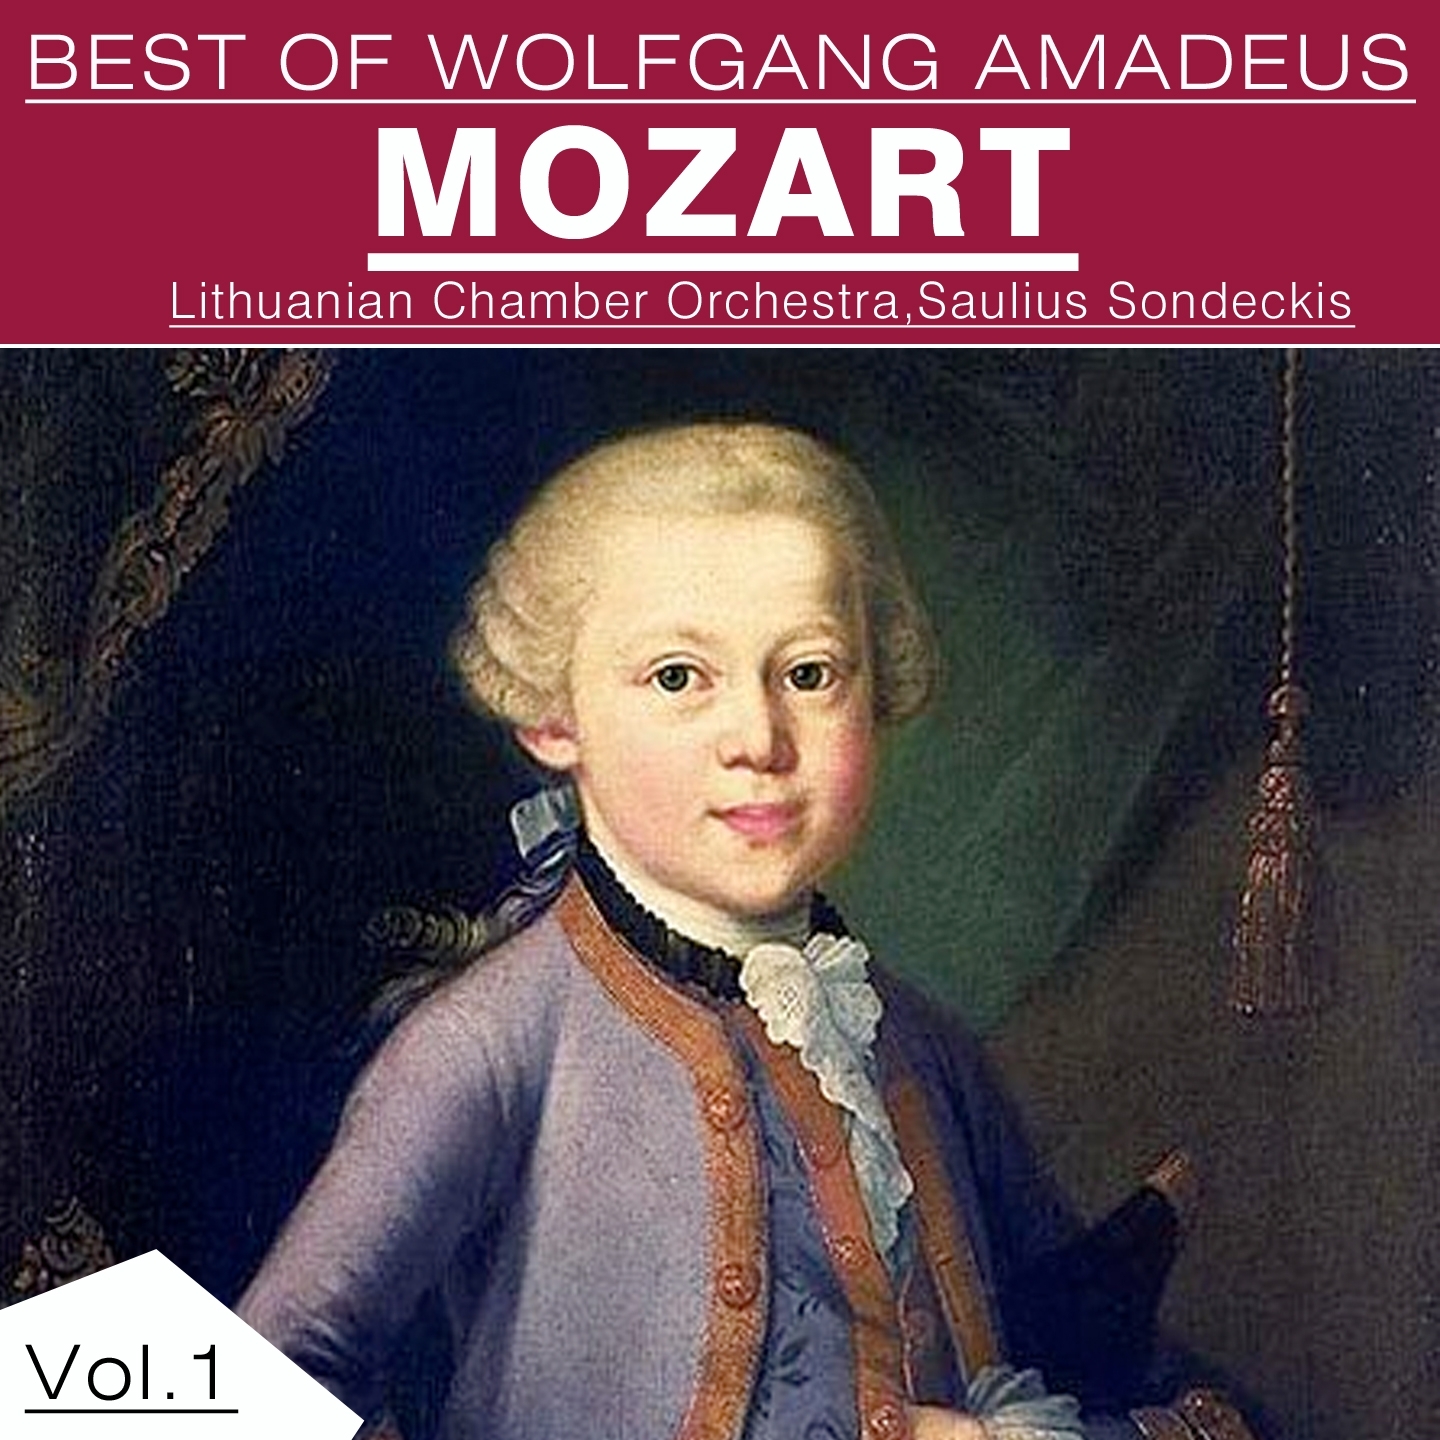 Best of Wolfgang Amadeus Mozart, Vol. 1